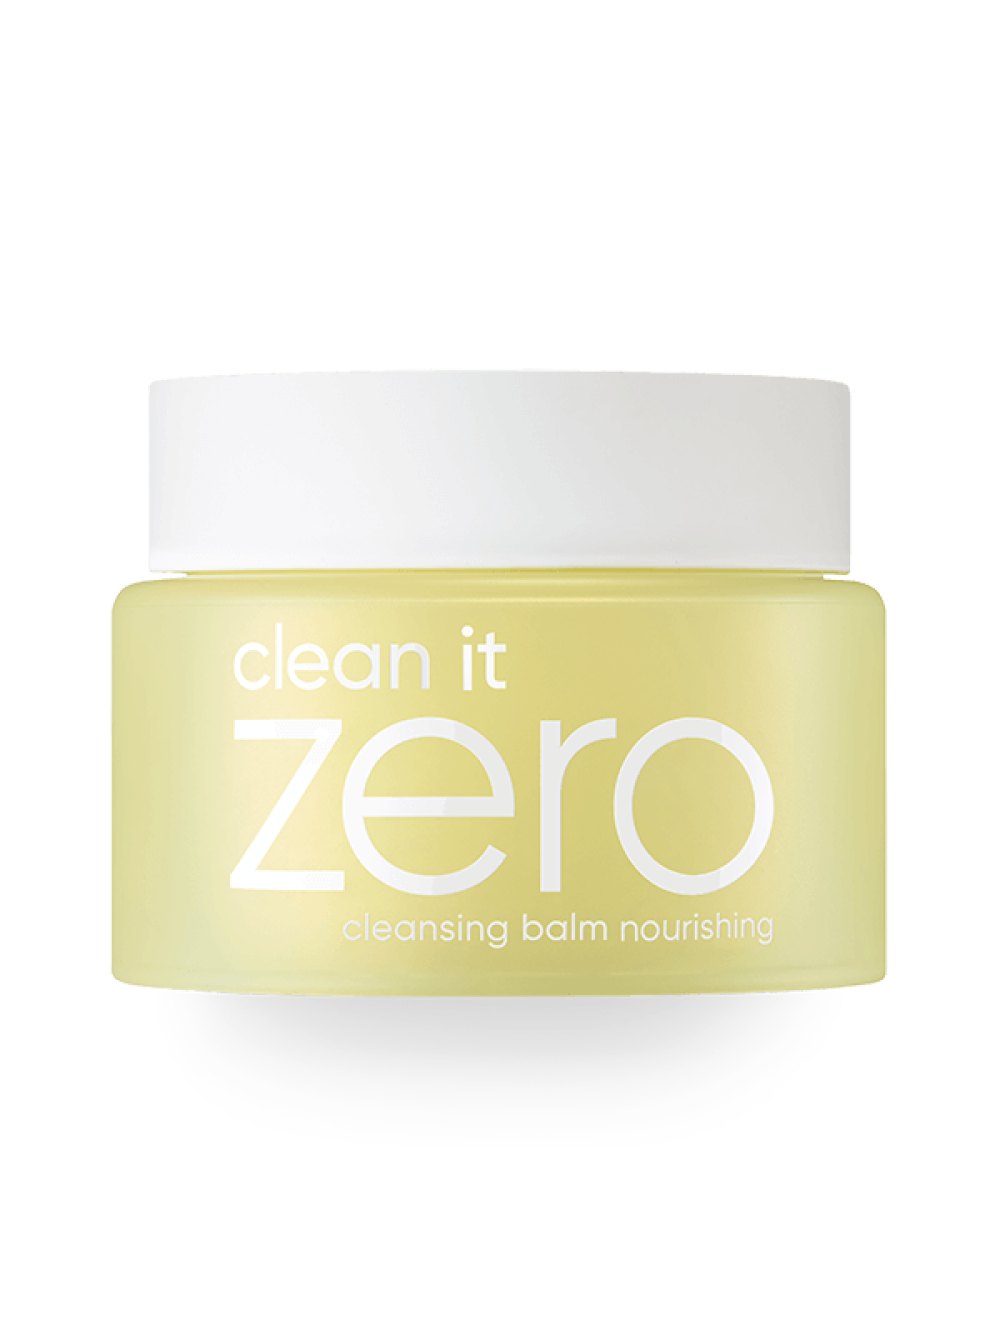 Clean it zero cleansing